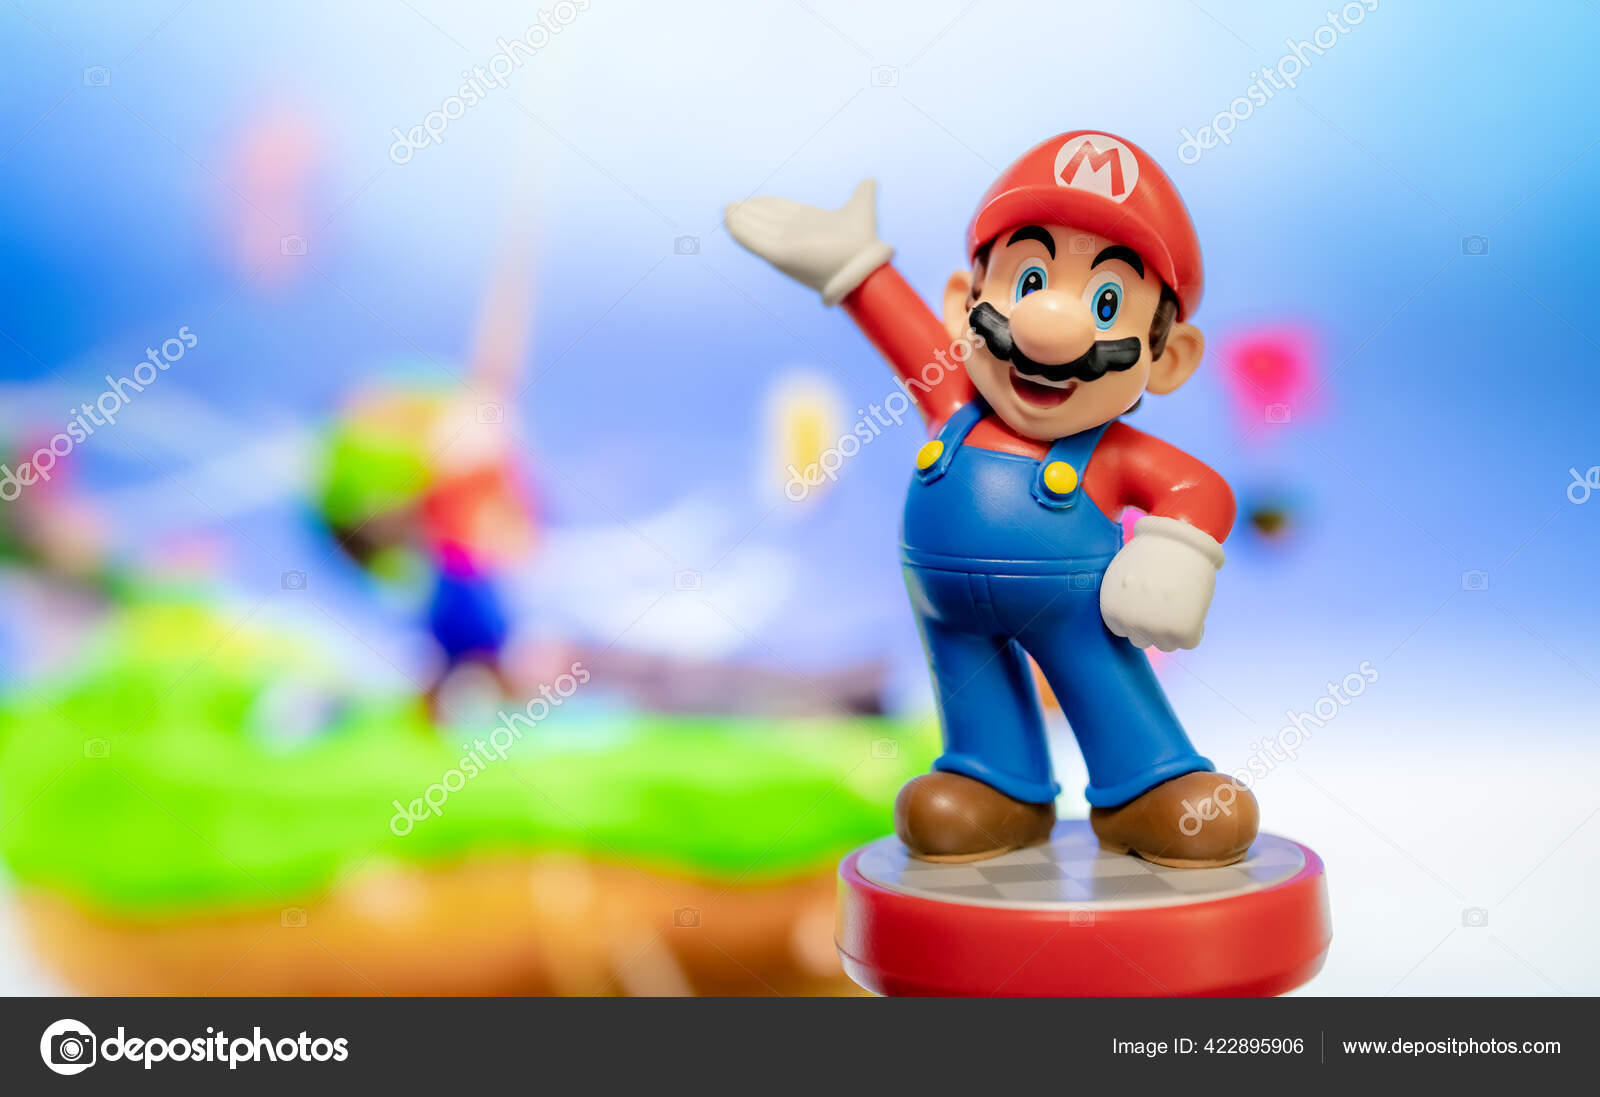 3,221 Super Mario Images, Stock Photos, 3D objects, & Vectors